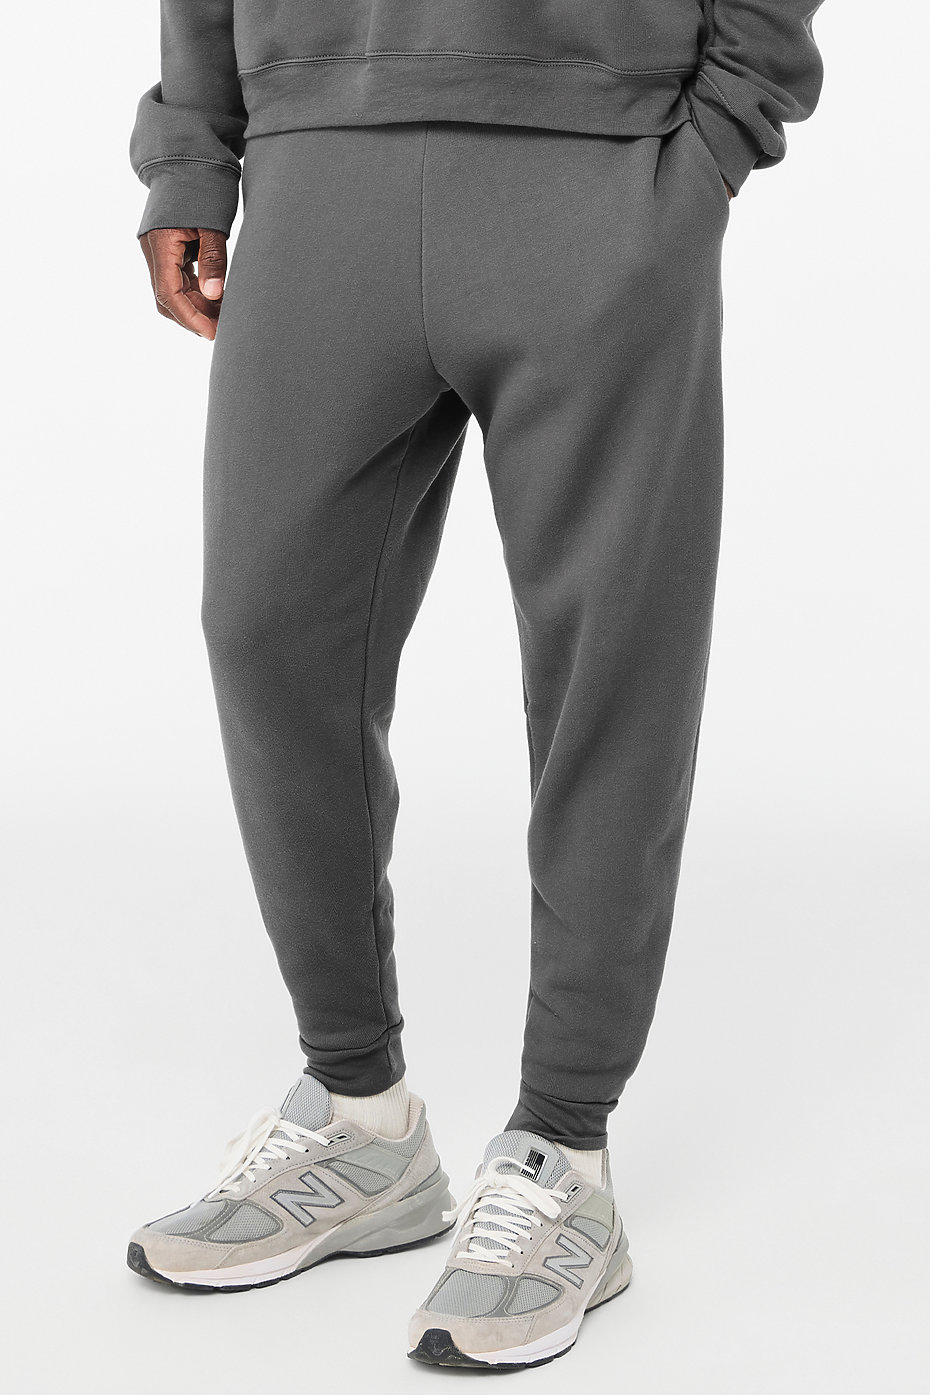 Grey Cotton Sweatpants Cuffed Sweatpants Women's Joggers